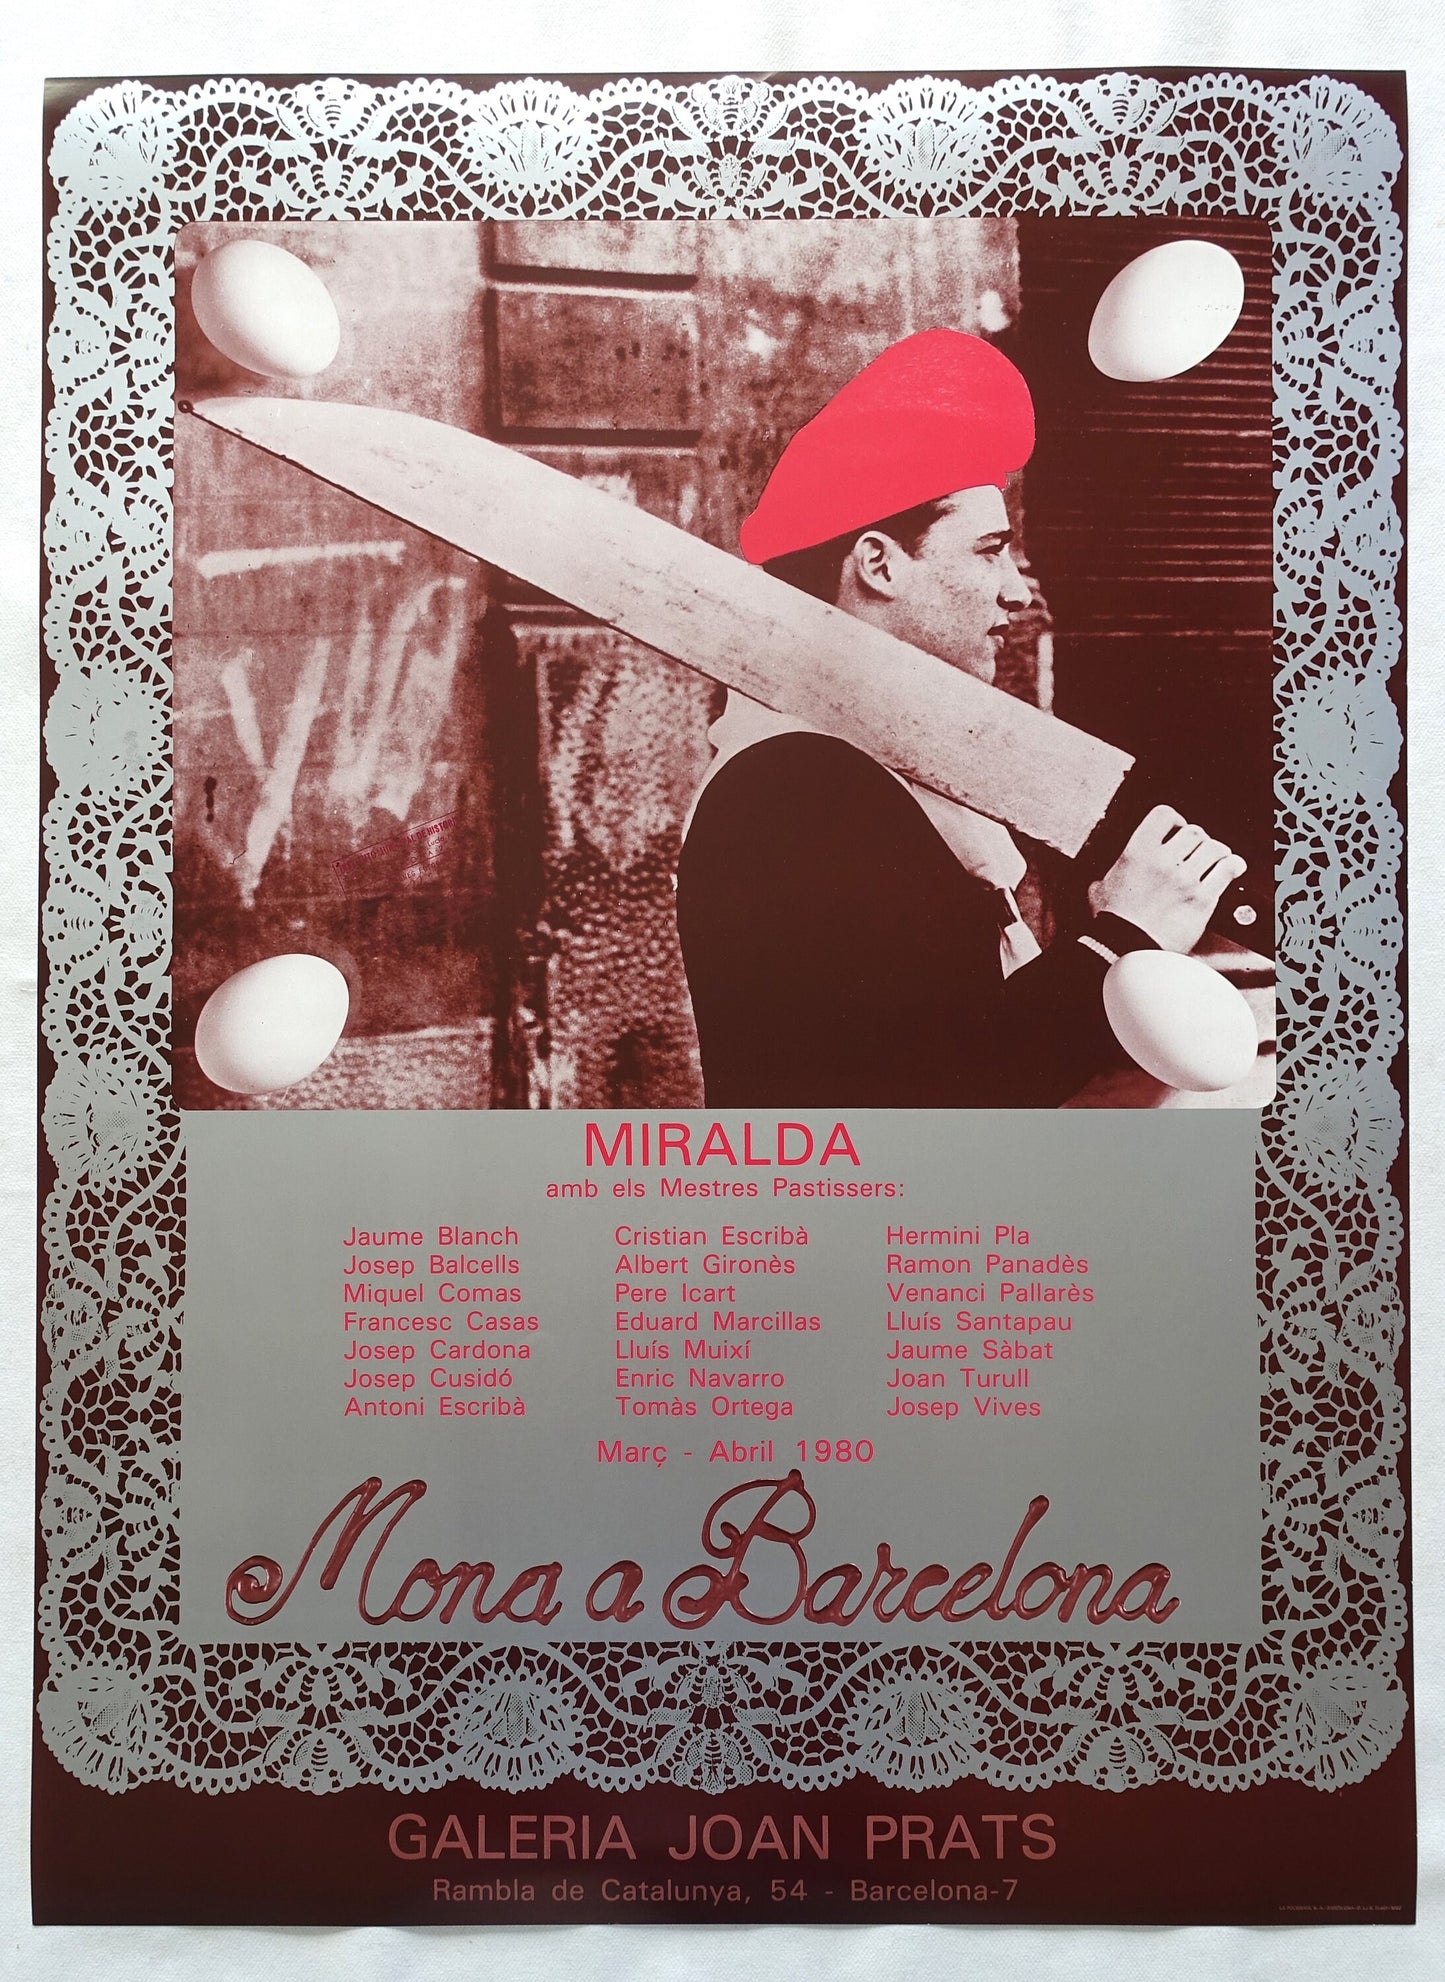 1980 Miralda Spanish Exhibition Poster - Original Vintage Poster